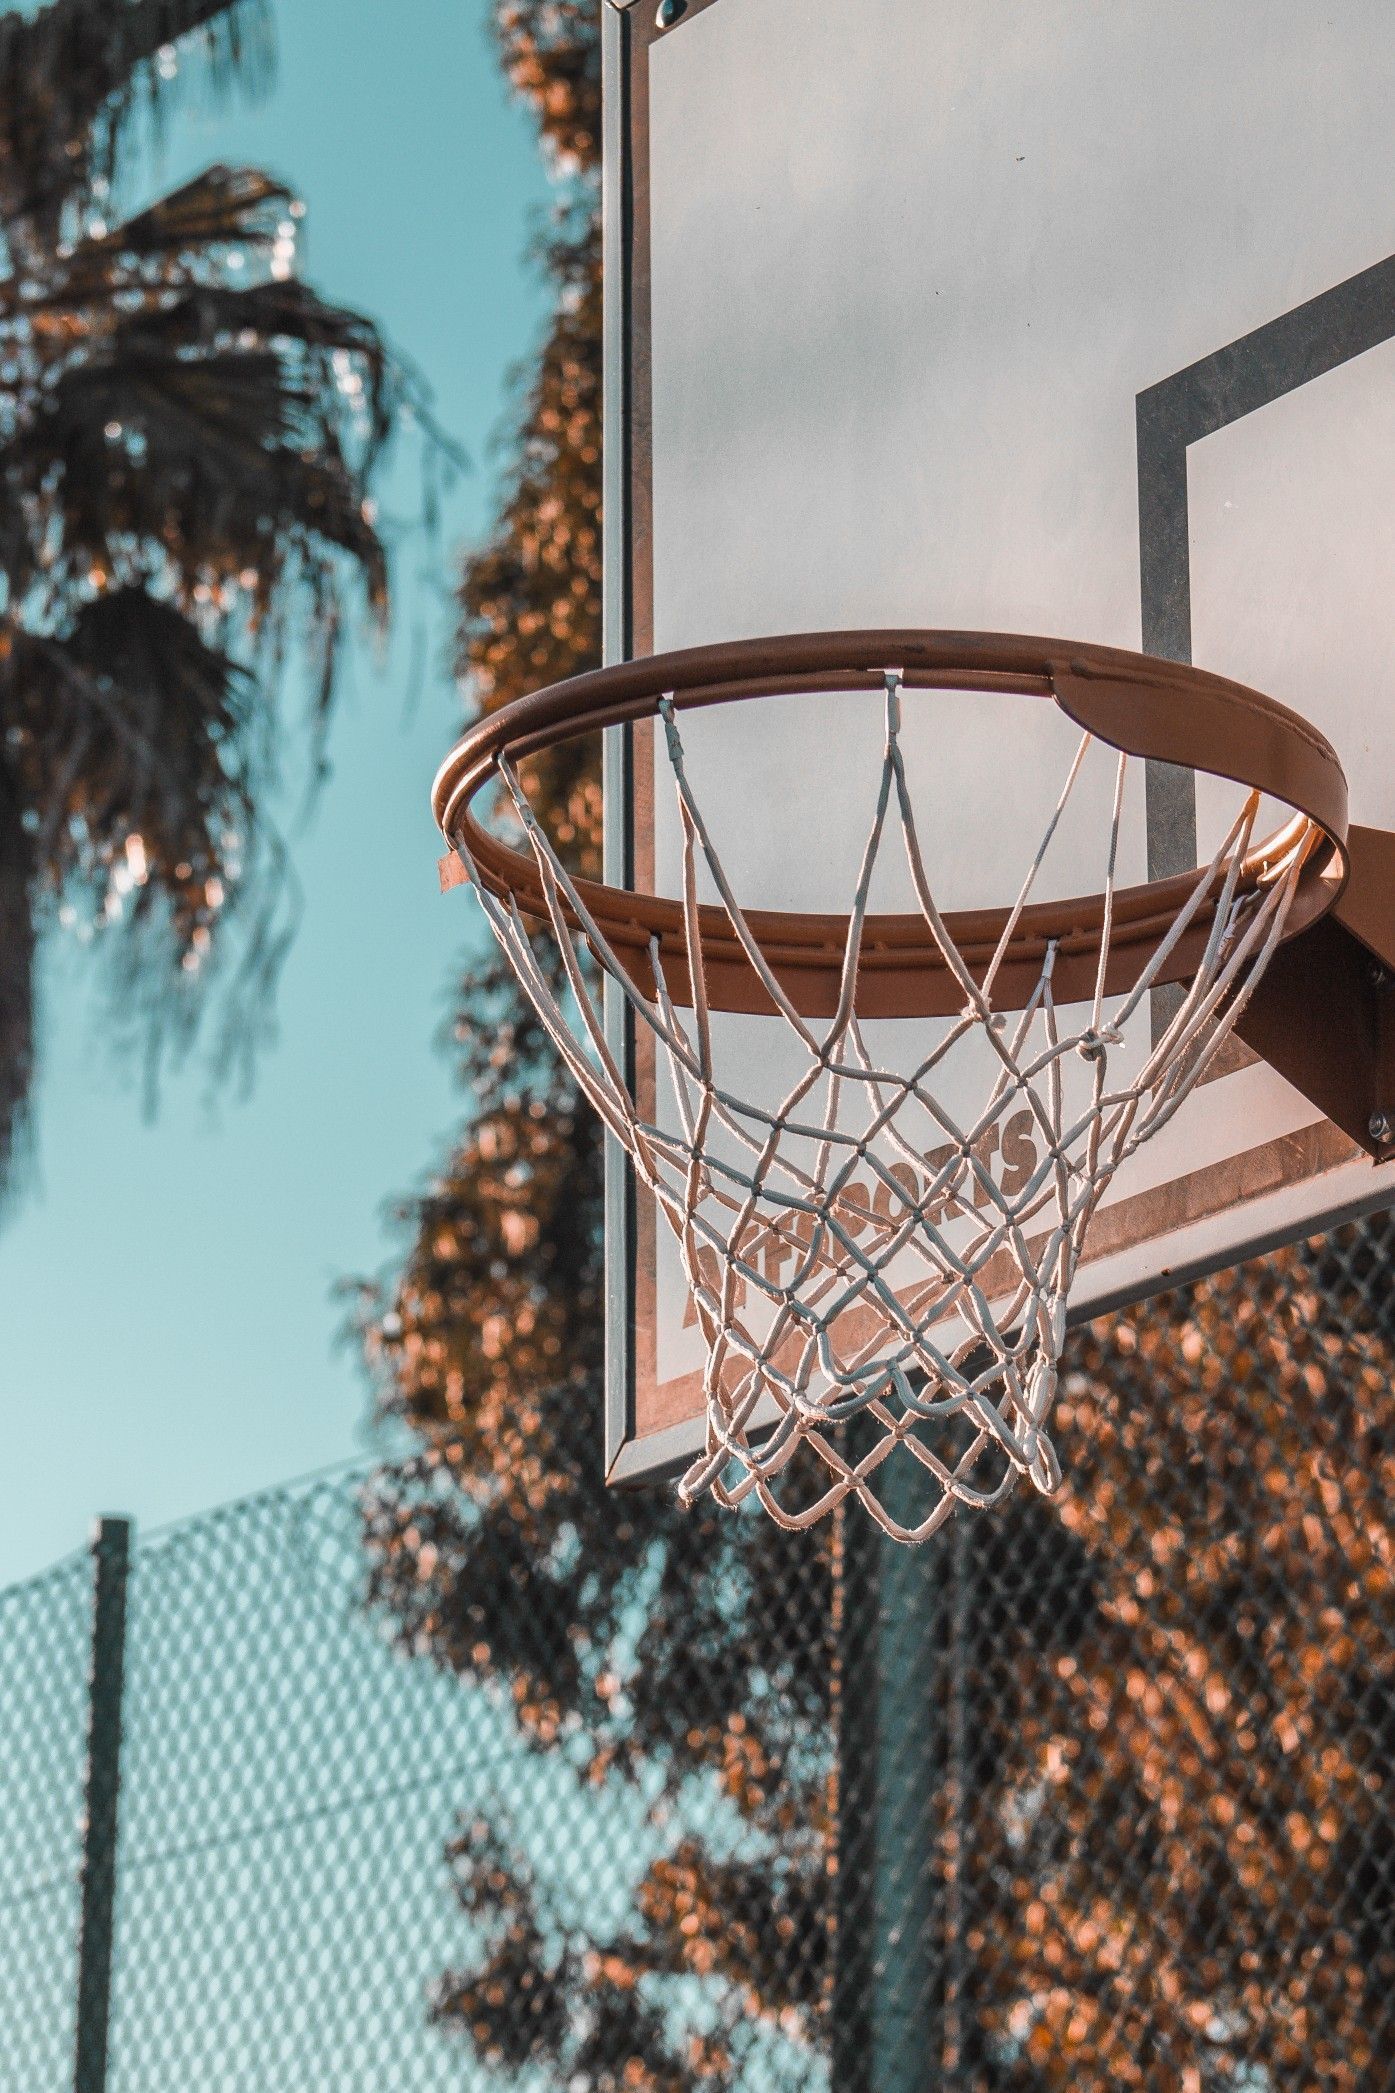 basketball photography. Basketball photography, Basketball background, Basketball art